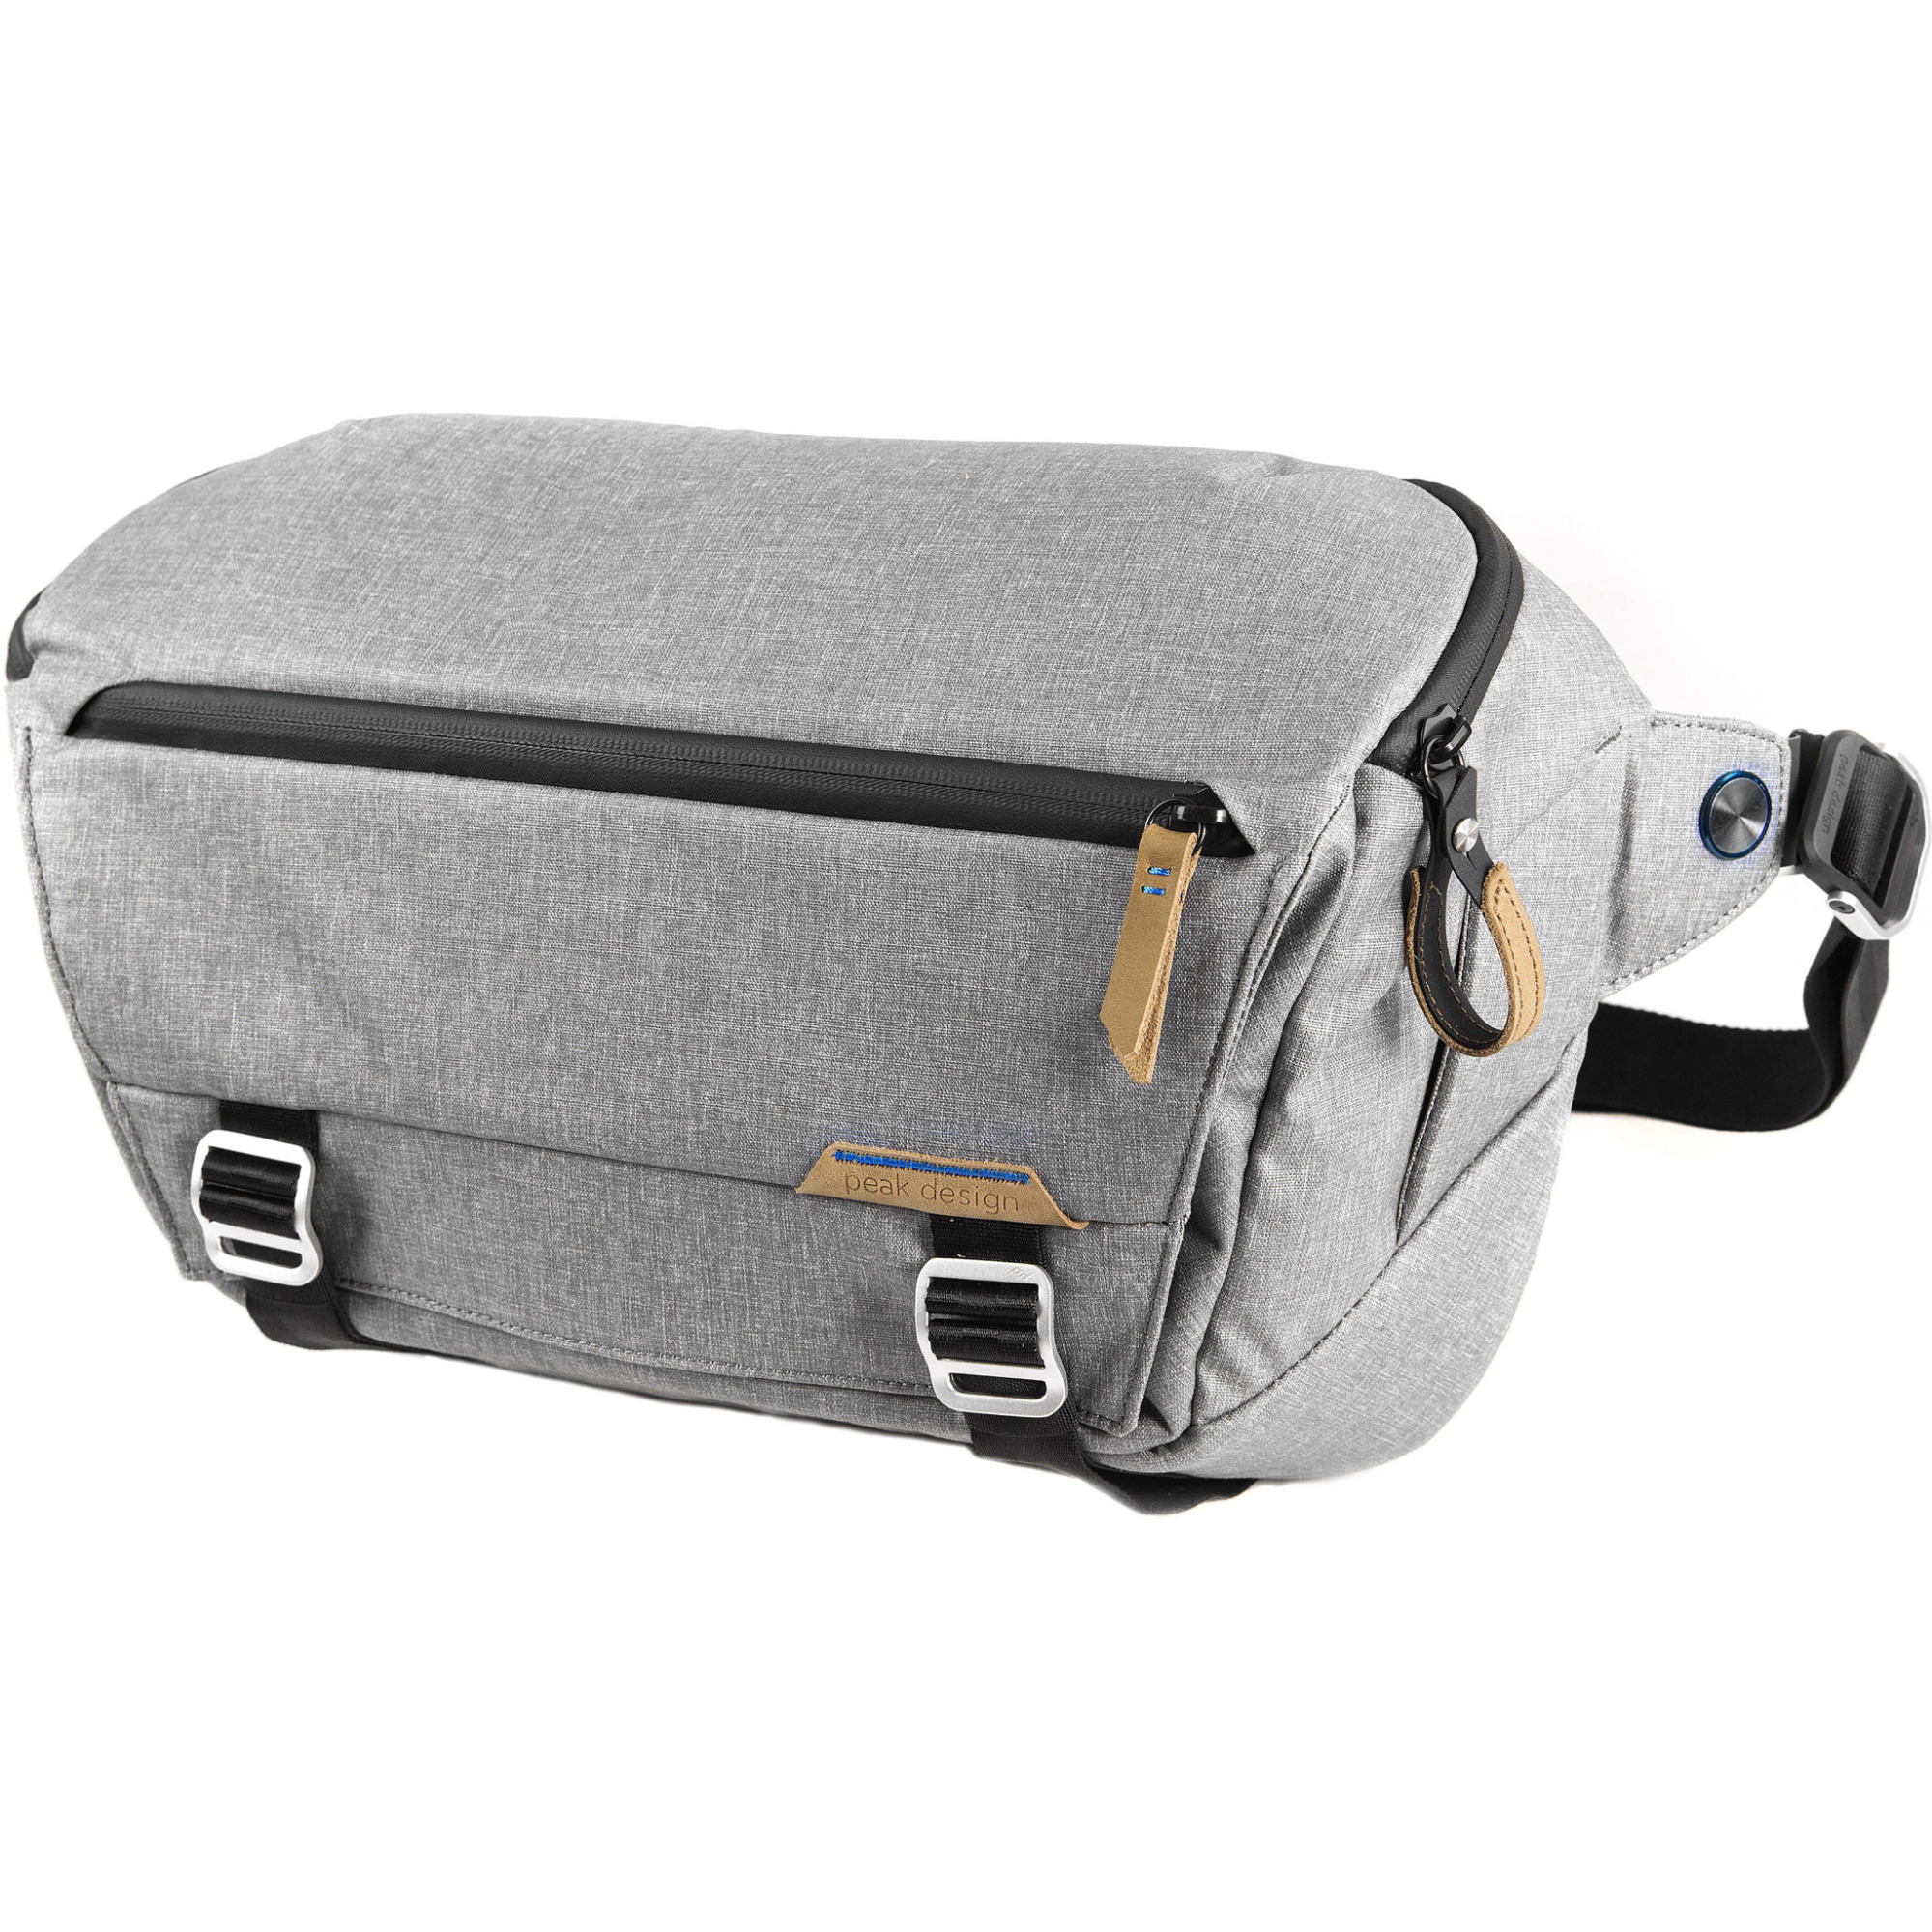 Best Camera Sling Bags - Peak Design Everyday Sling 10L